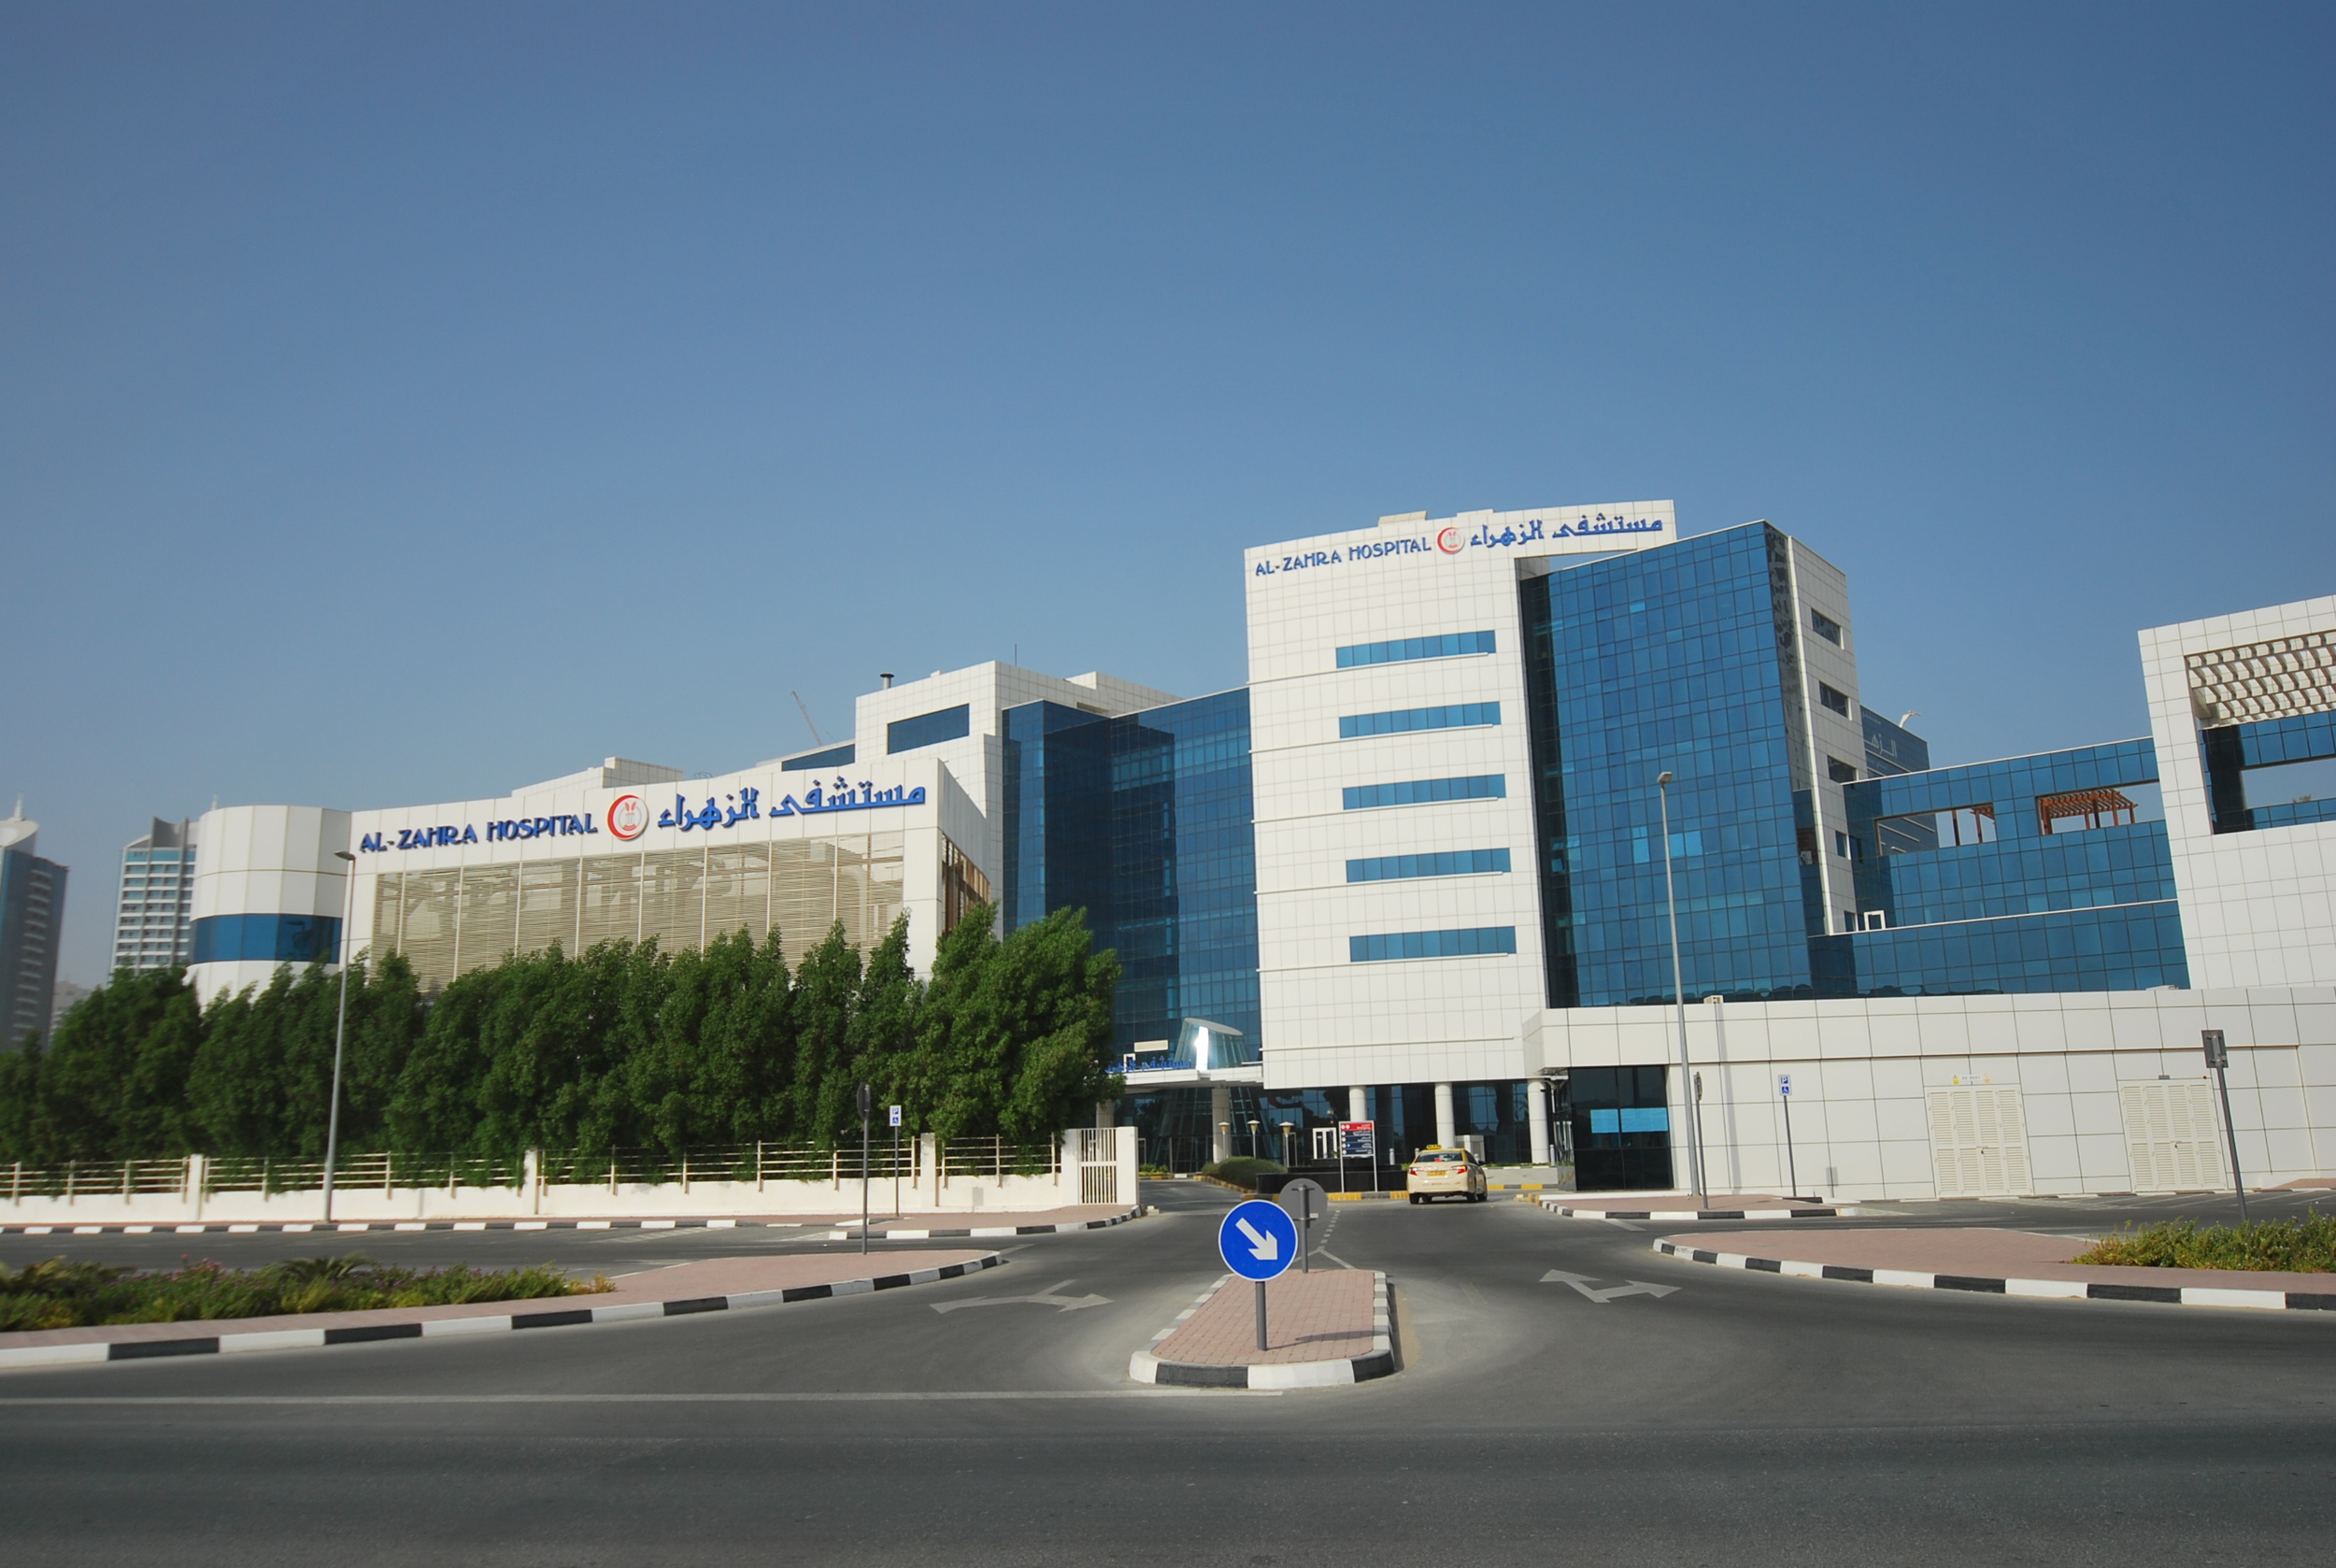 Al Zahra Hospital Dubai